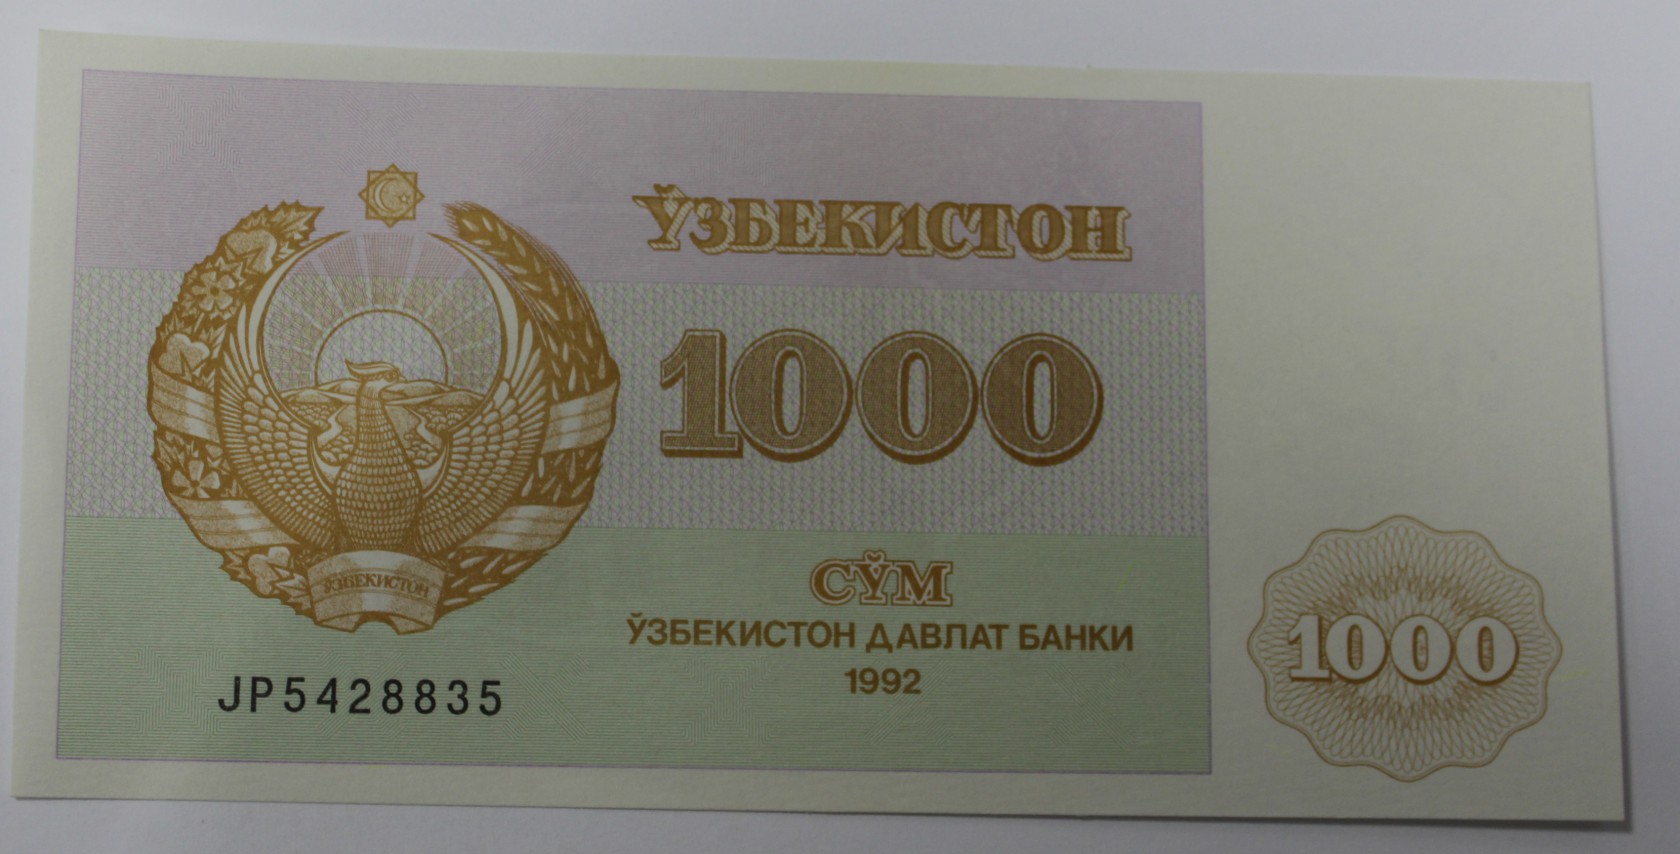 1000 р сум. 1000 Сум Узбекистан. Купюра Узбекистана 1000. Купюра 1000 сум Узбекистан. Банкноты Узбекистана 1992 года.